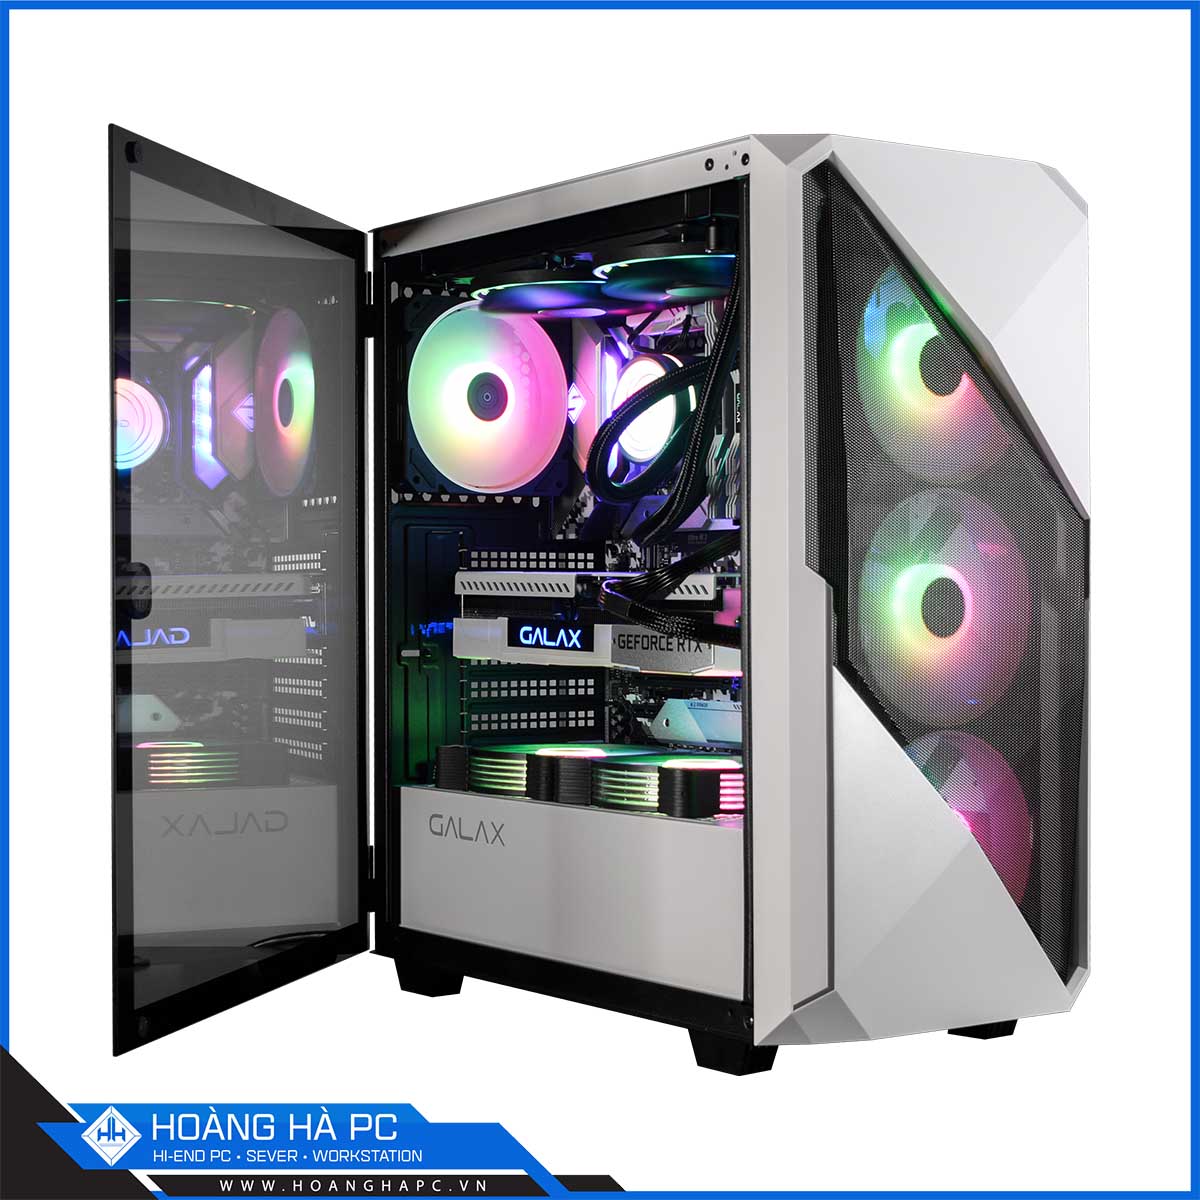 GALAX PC Case (REV-01W) White